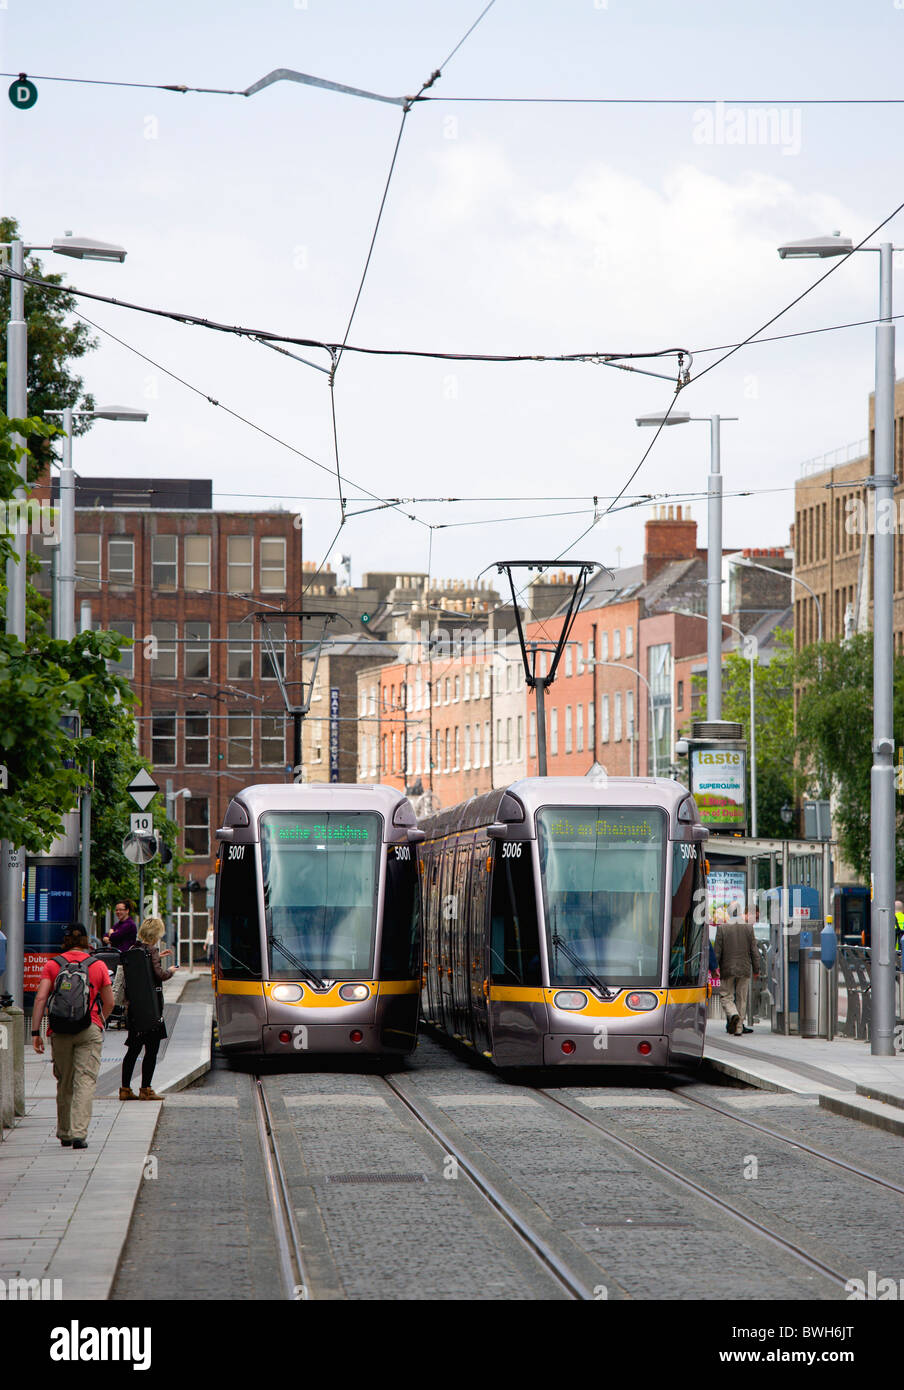 Ireland, County Dublin, Dublin City, Luas light rail trams at stop beside Saint Stephen's Green with people. Stock Photo